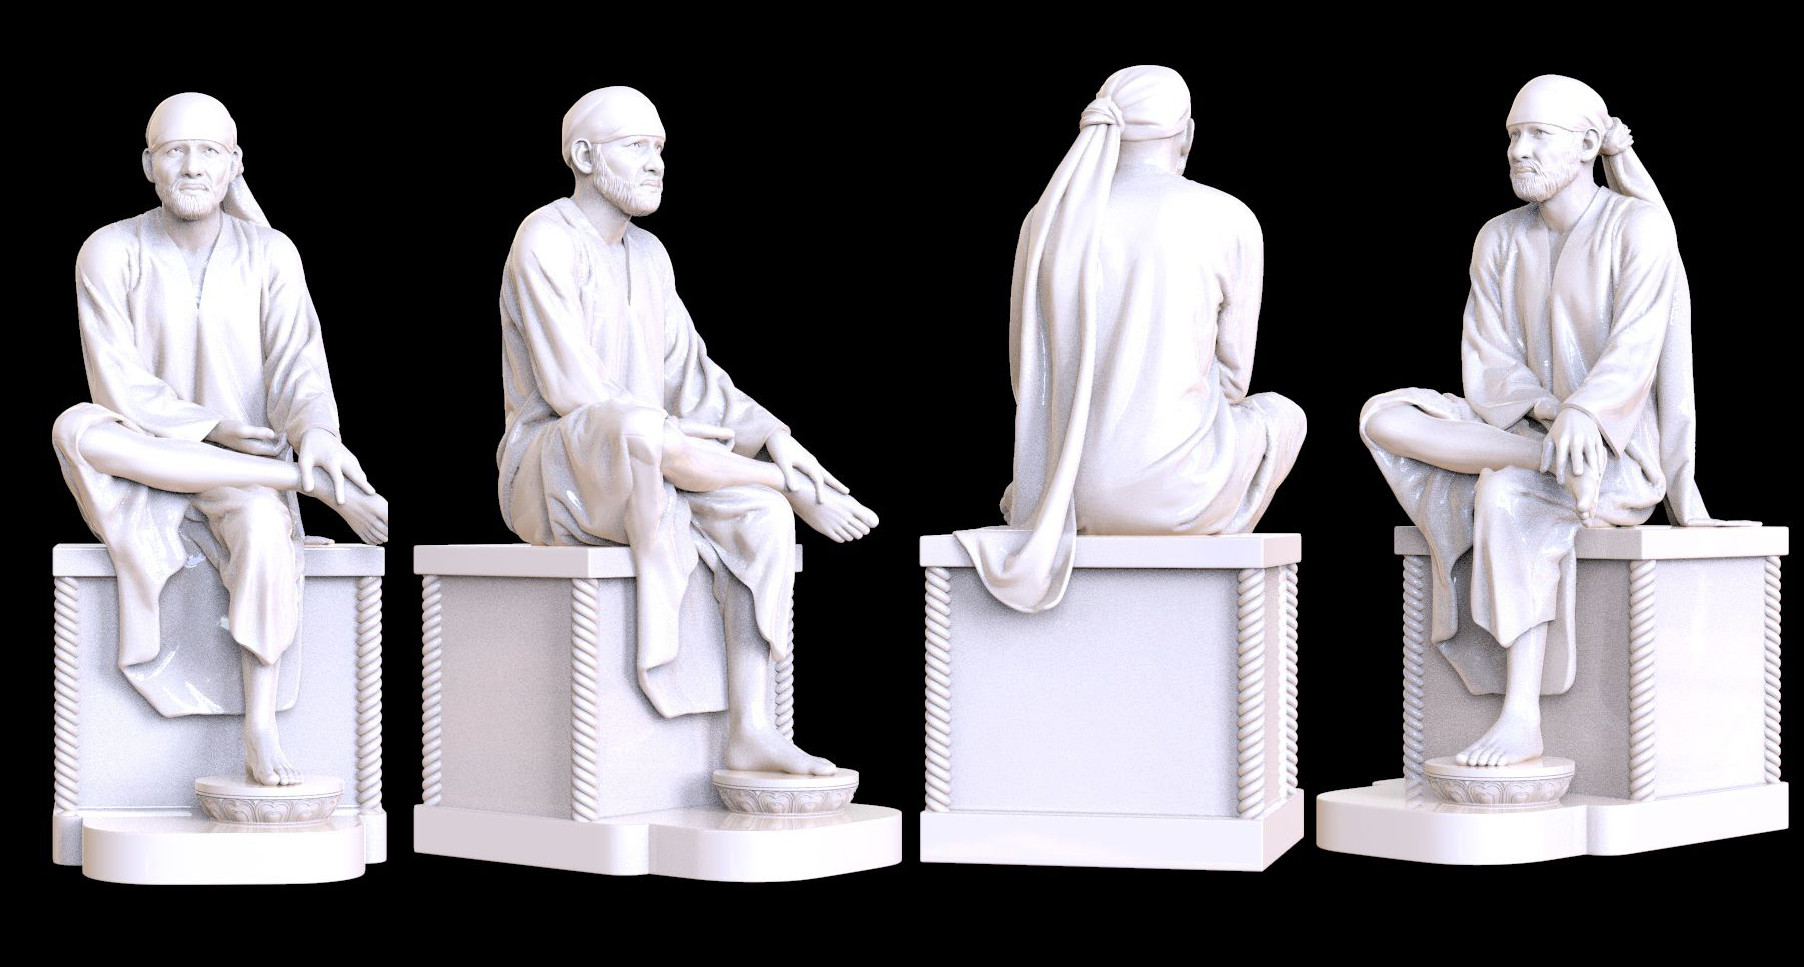 ArtStation - Sai_baba statue render